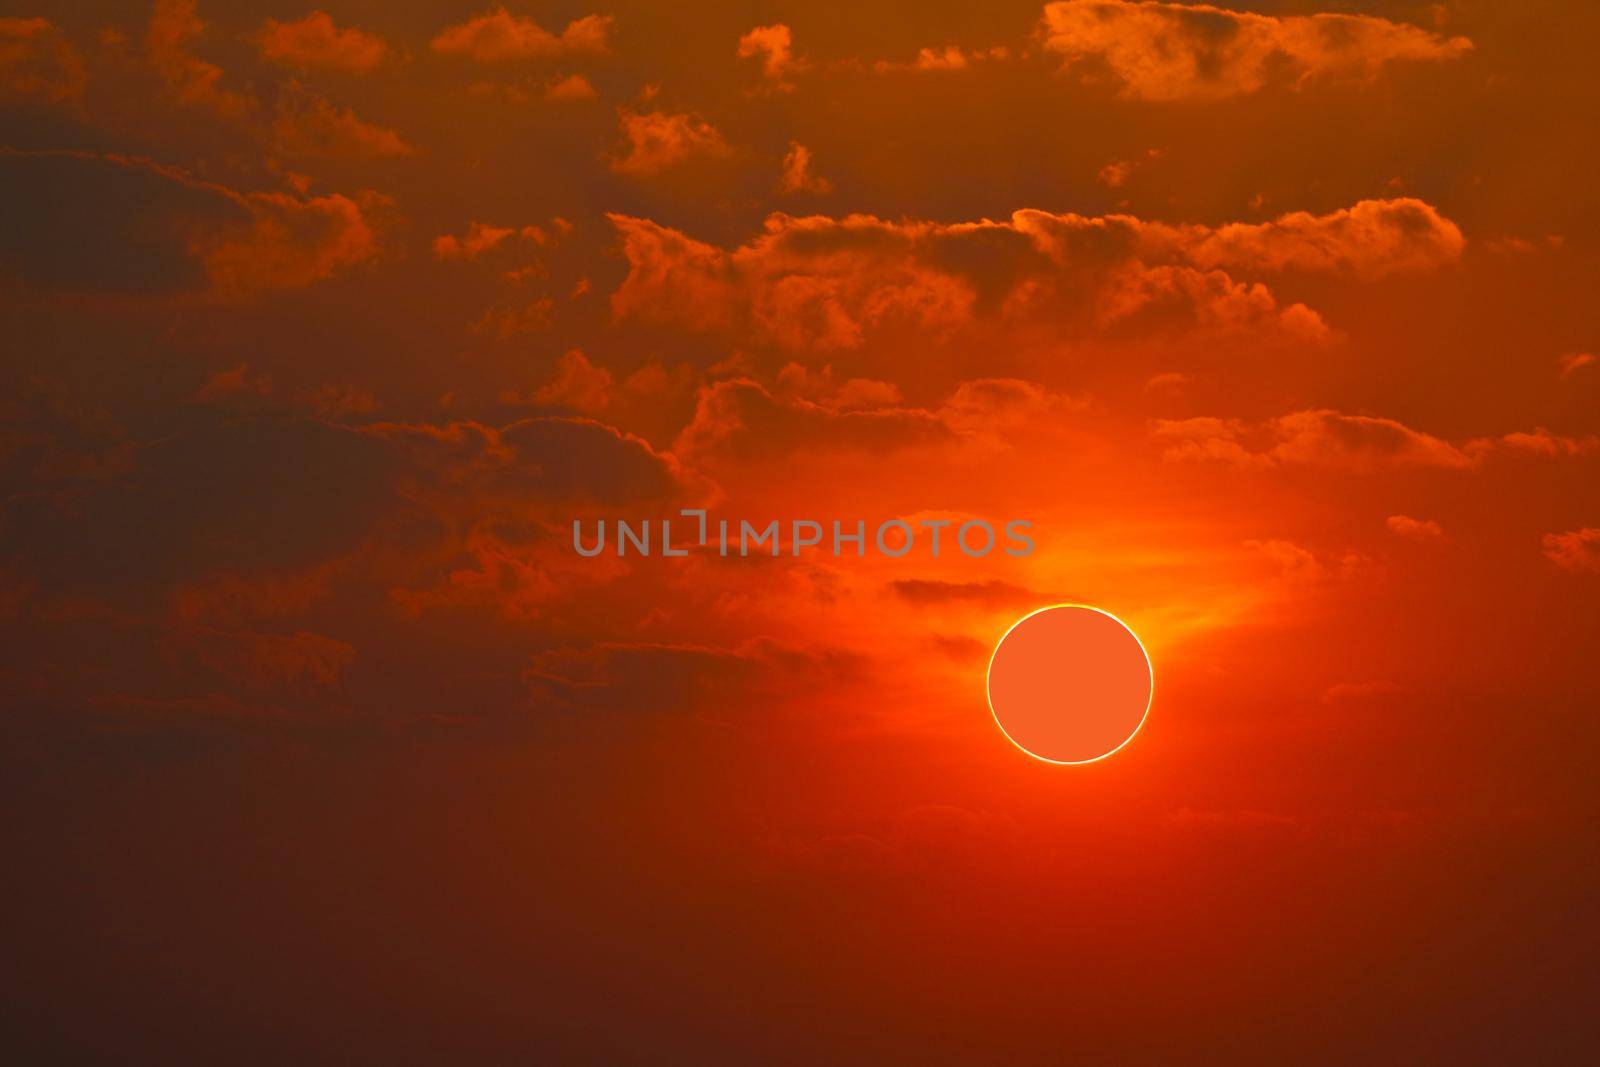 phenomenon of partial sun eclipse over sea and sunset sky